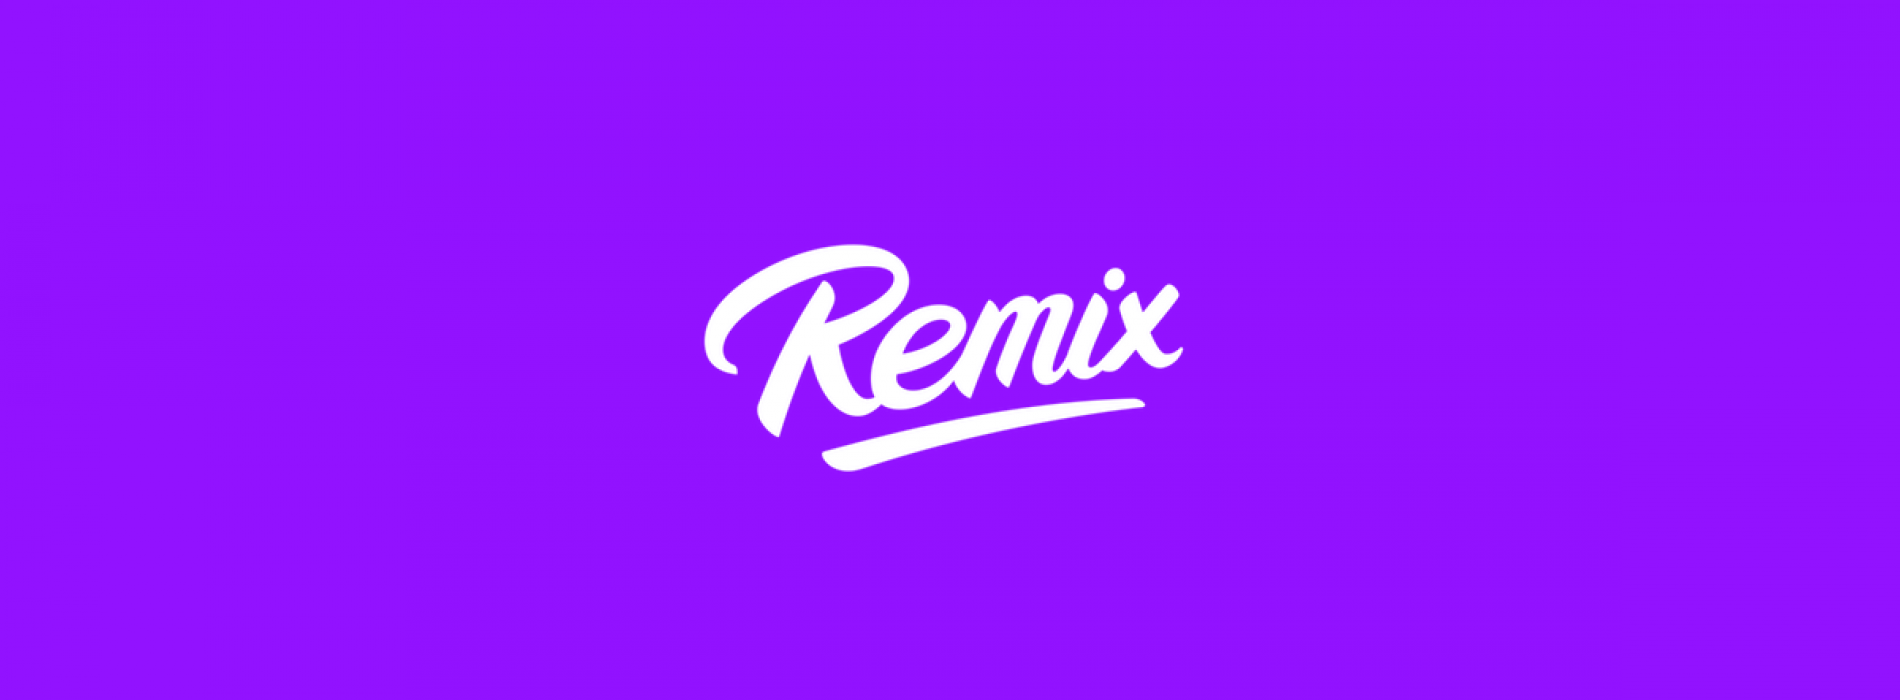 Remix OS Wallpapers - Wallpaper Cave